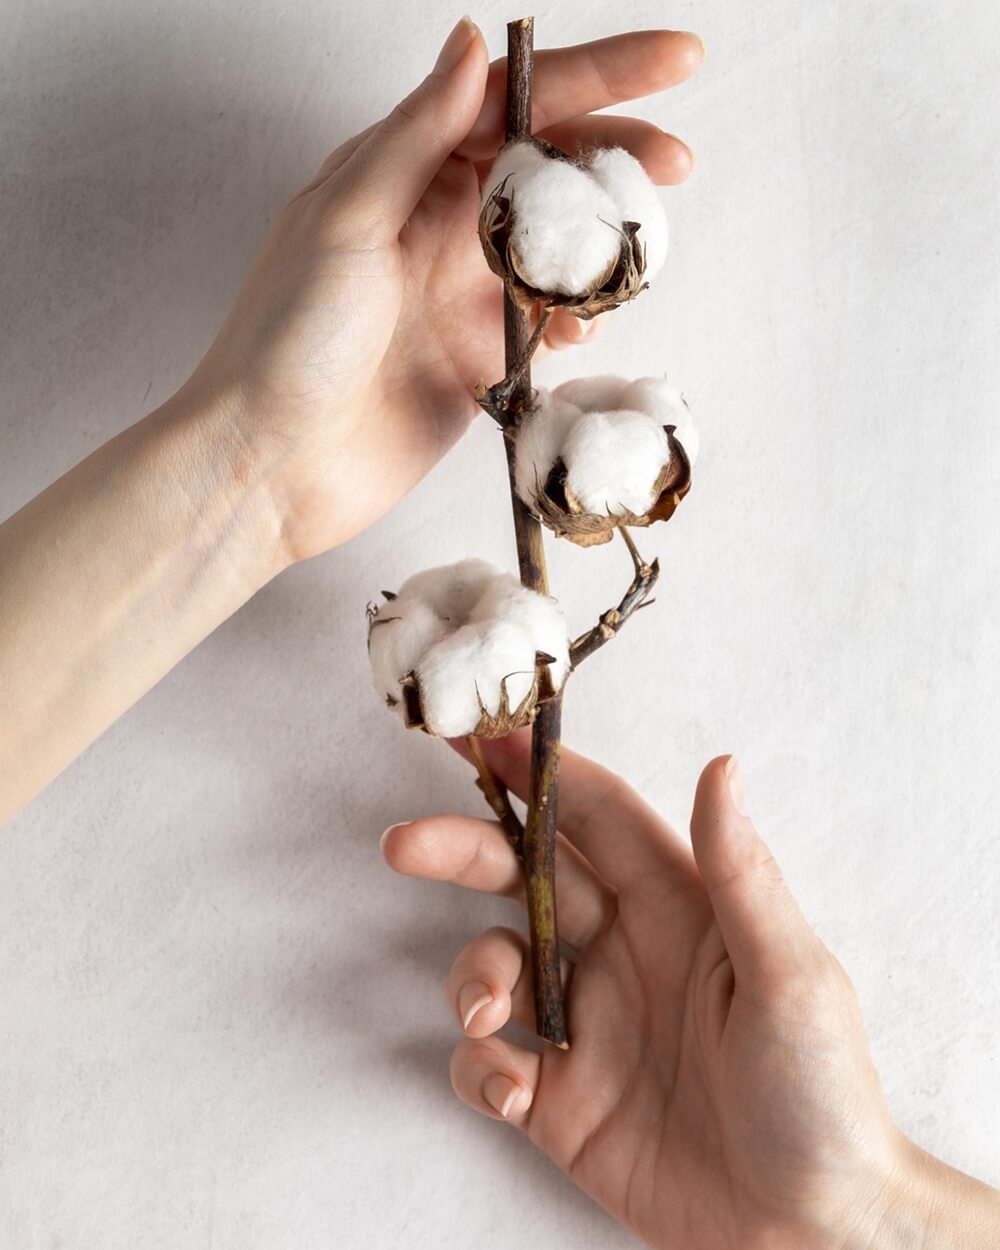 Young woman carefully cradling organic cotton